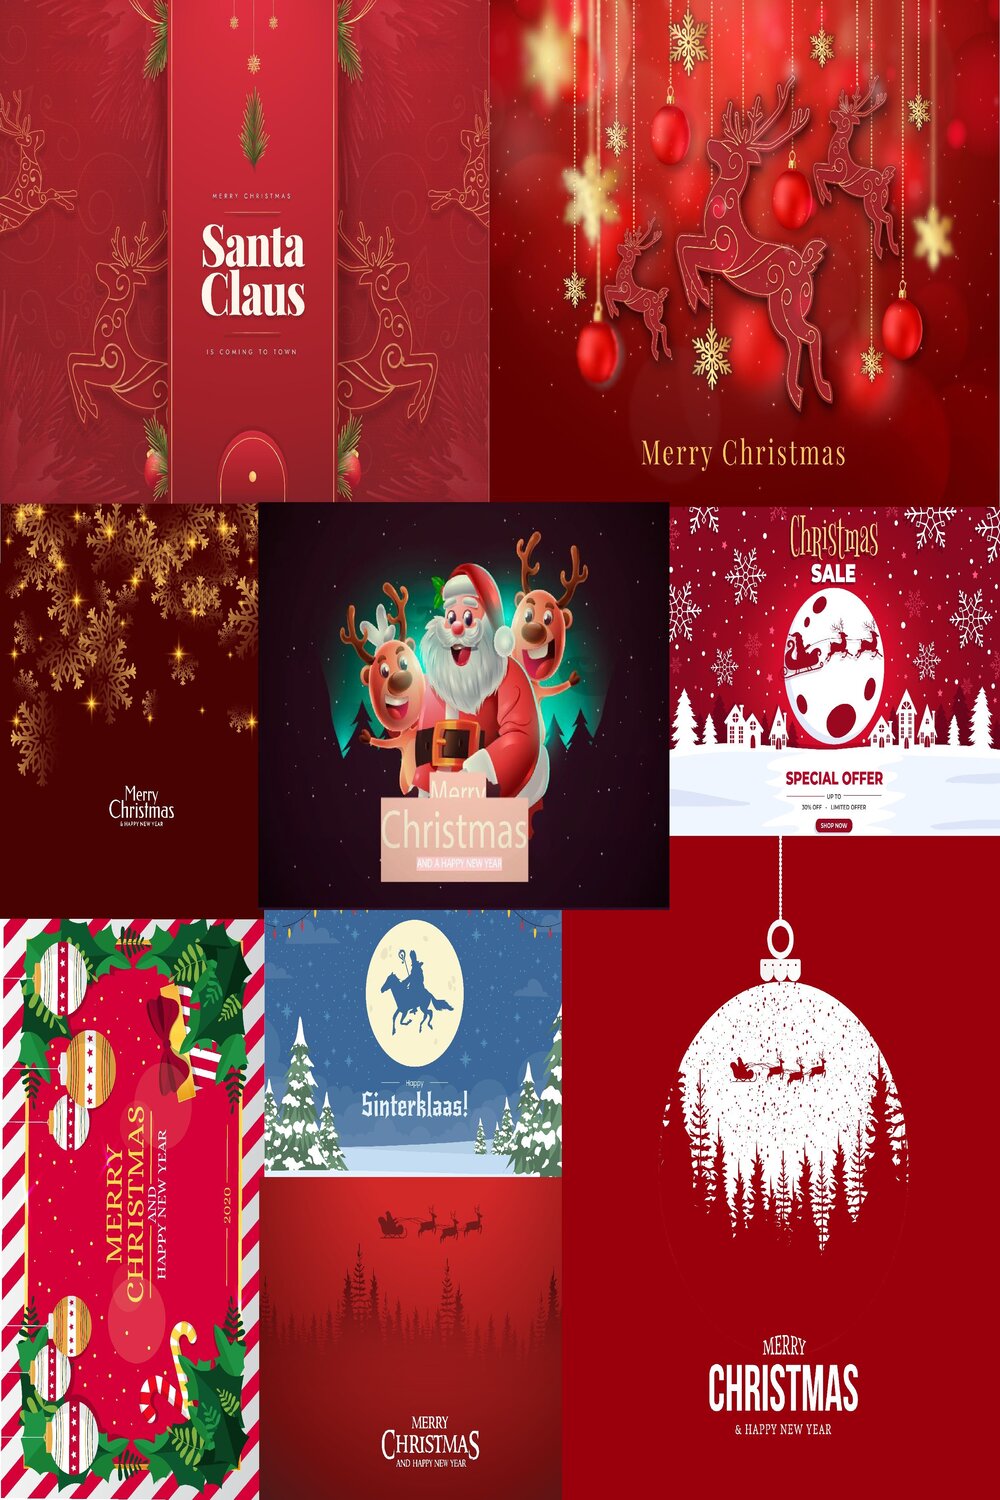 Merry Christmas Backgrounds Design pinterest image.